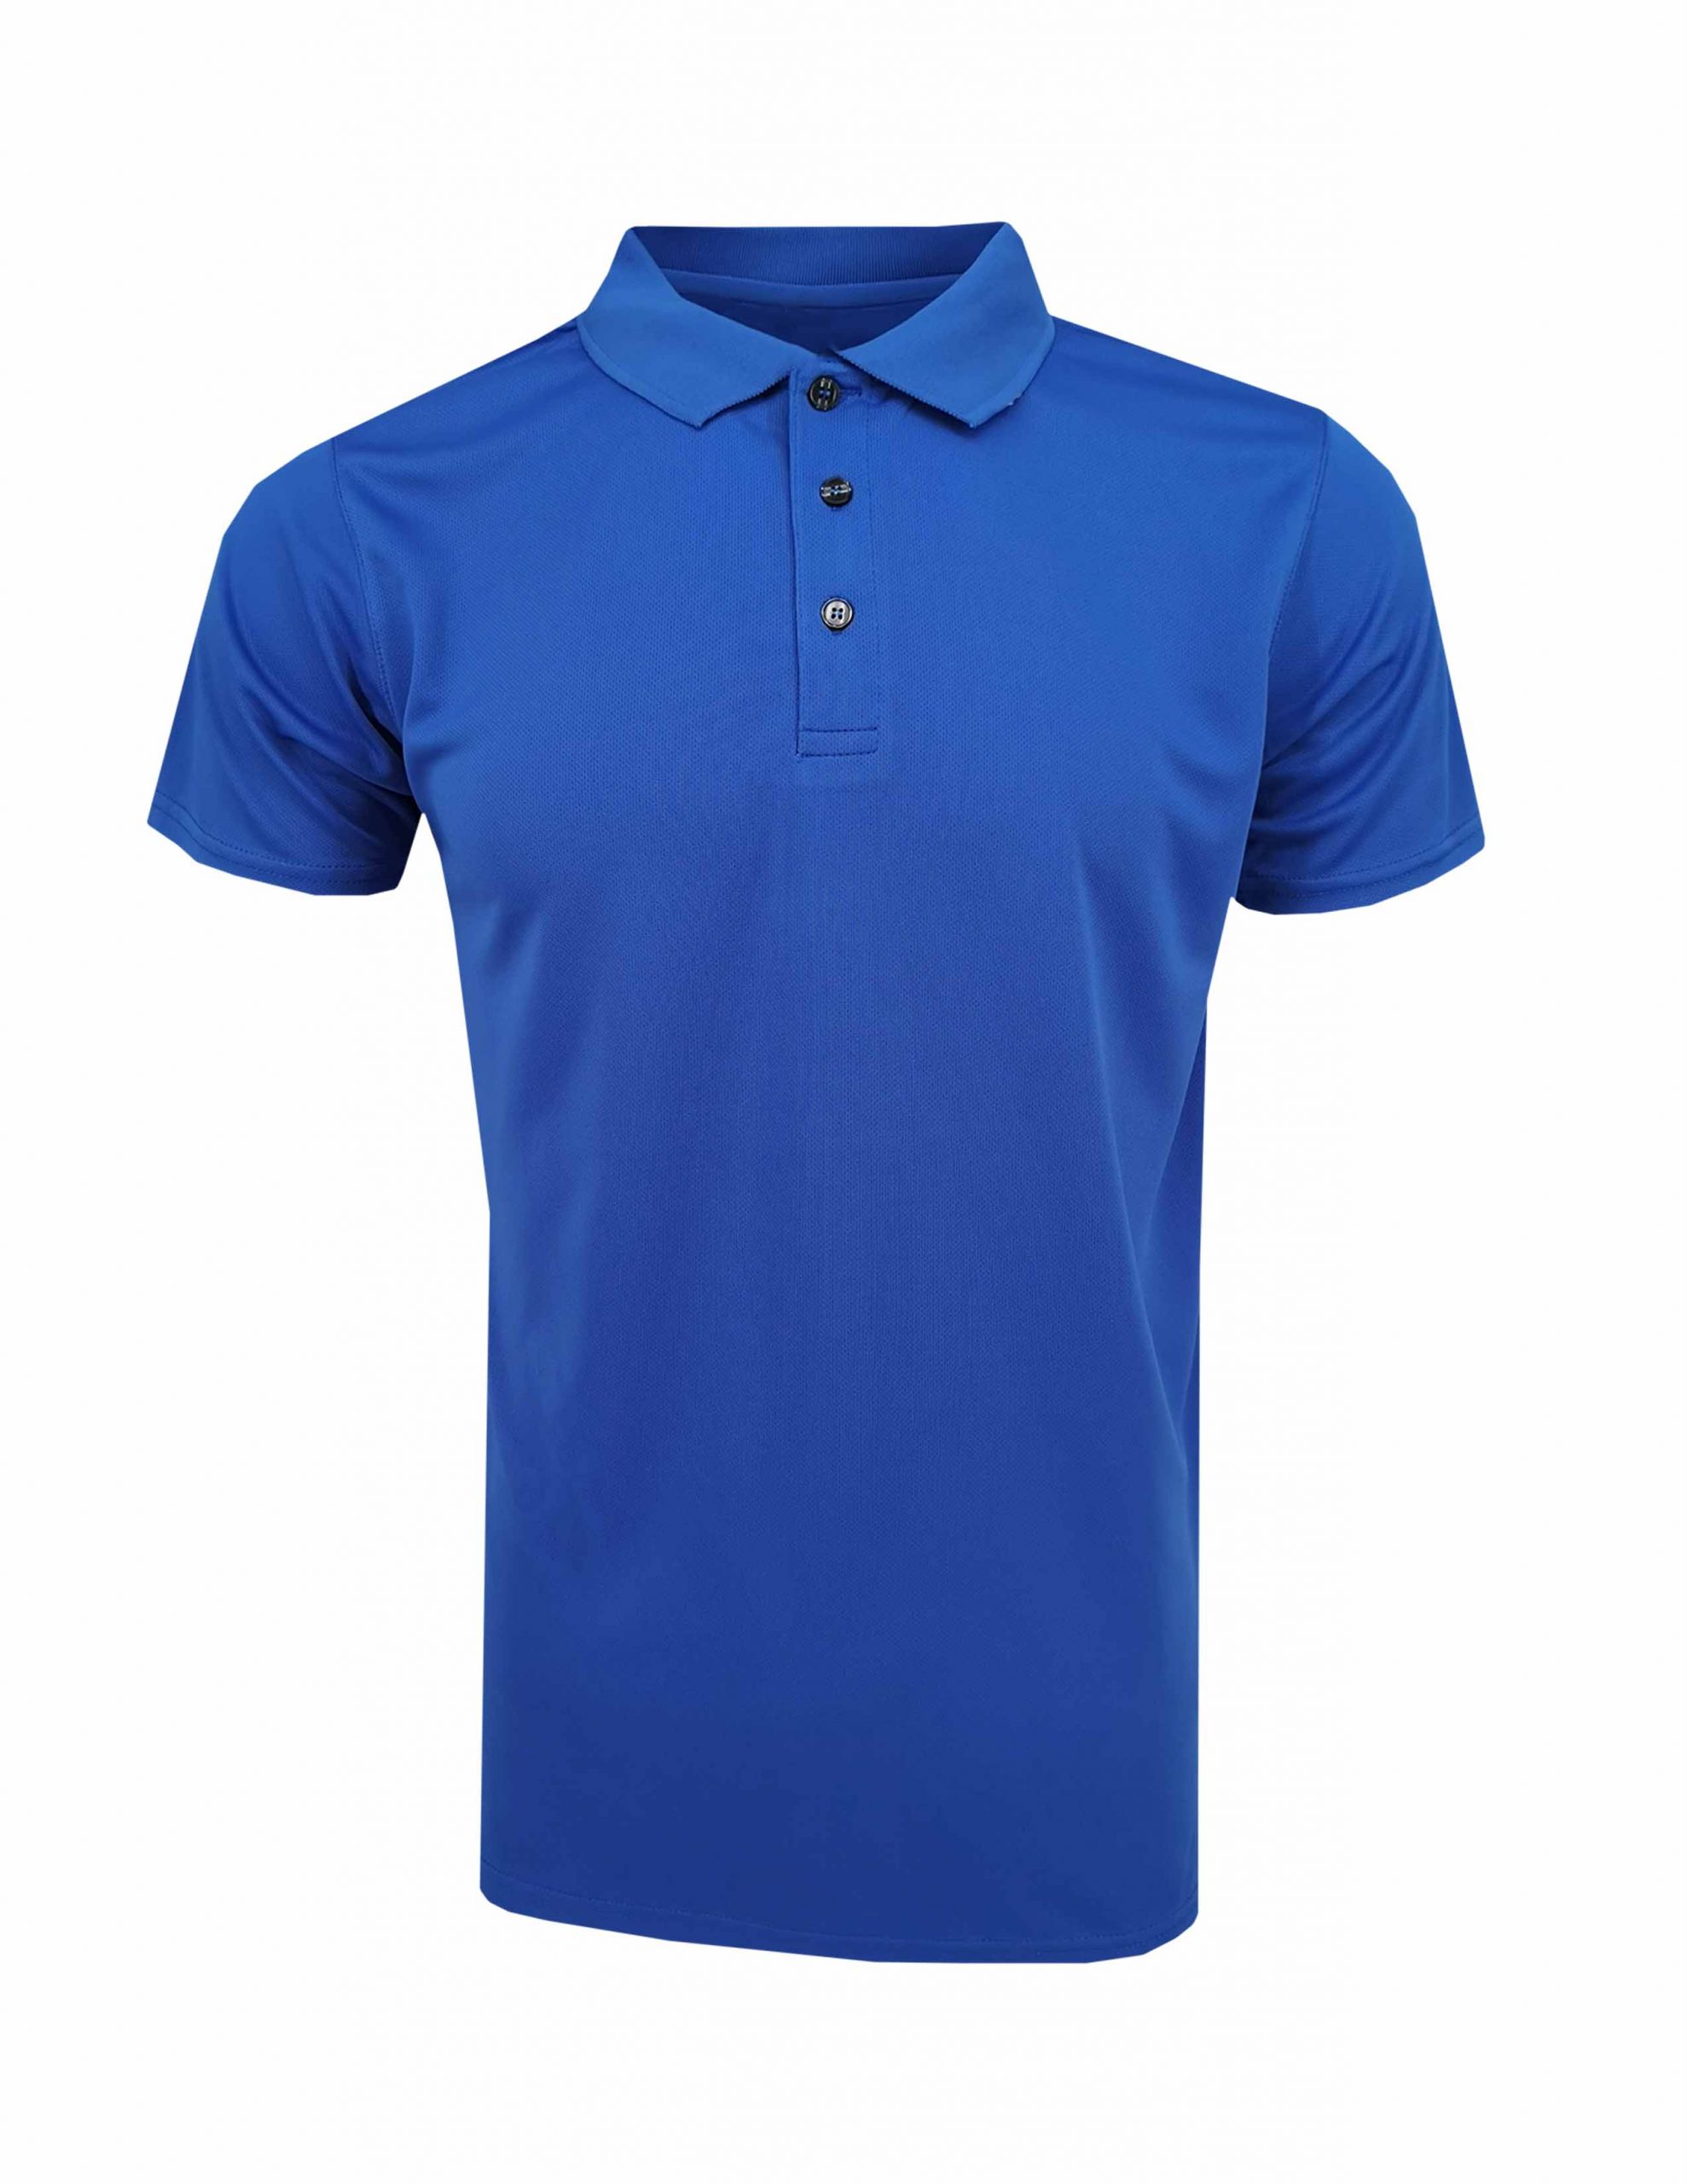 QDP 5307 Royal Blue - Rightway Basic T-Shirt | Basic T-Shirt Supplier ...